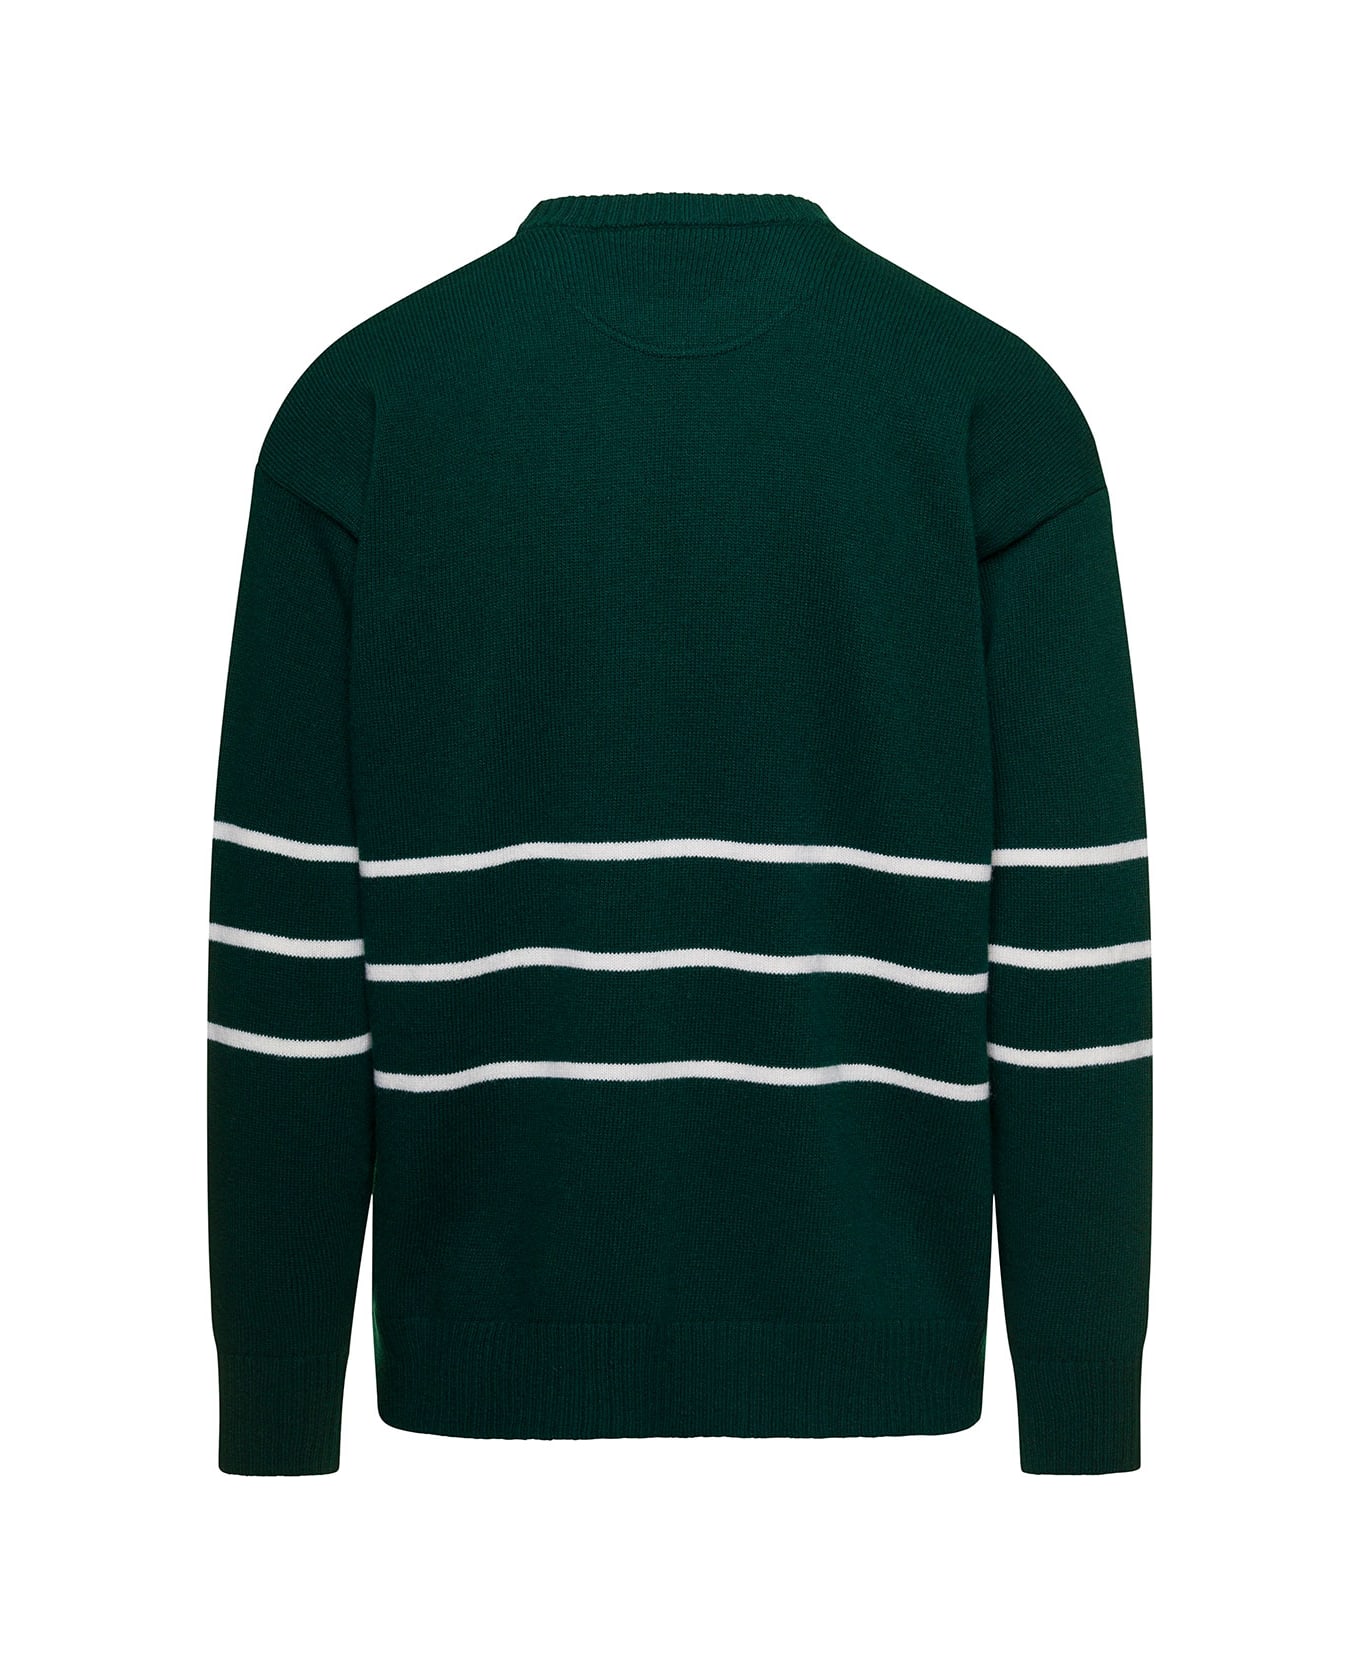 Valentino Garavani Sweater - Green